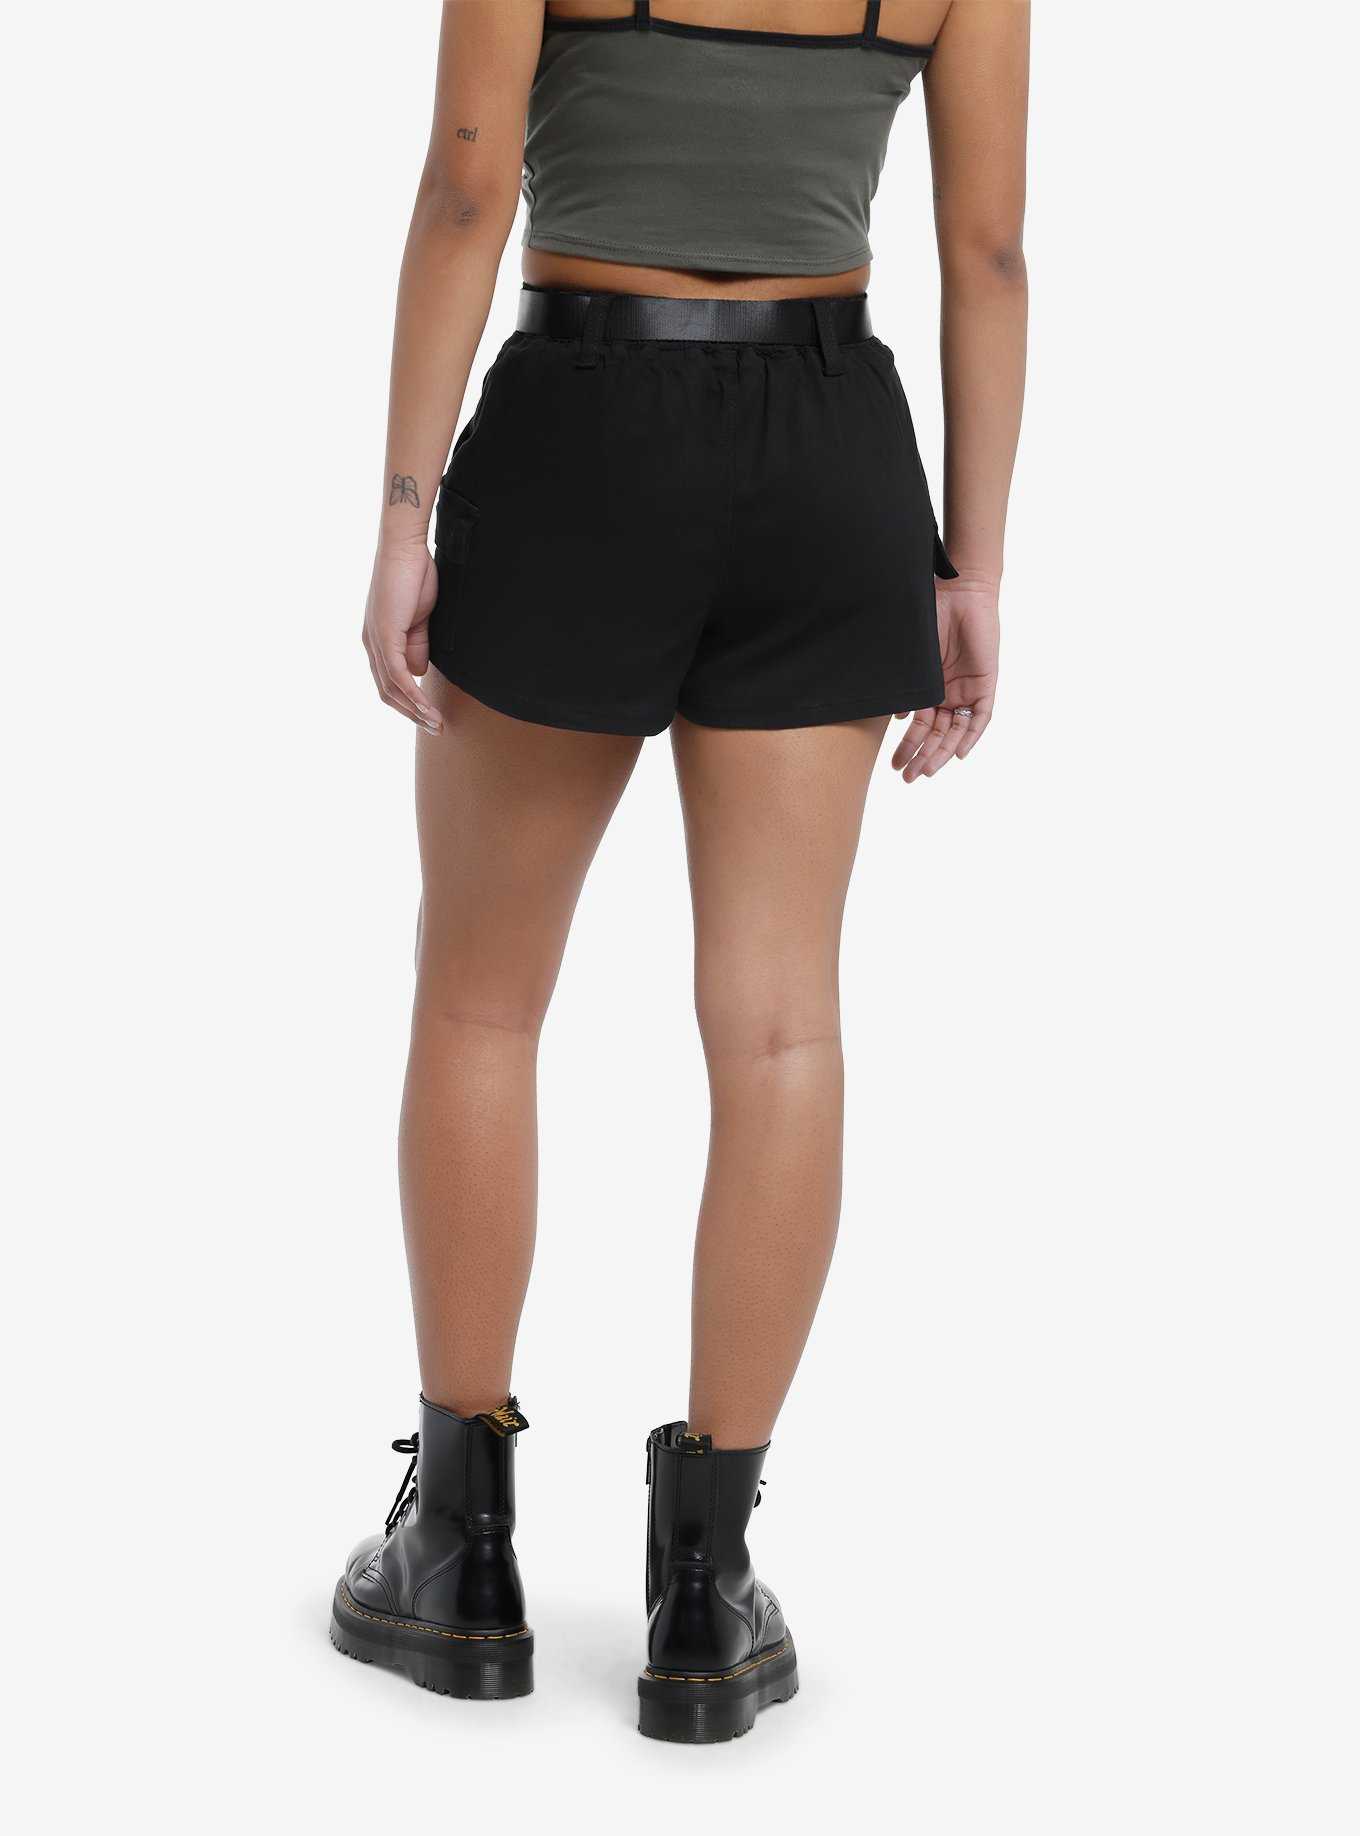 Black Cargo Shorts With Belt, , hi-res